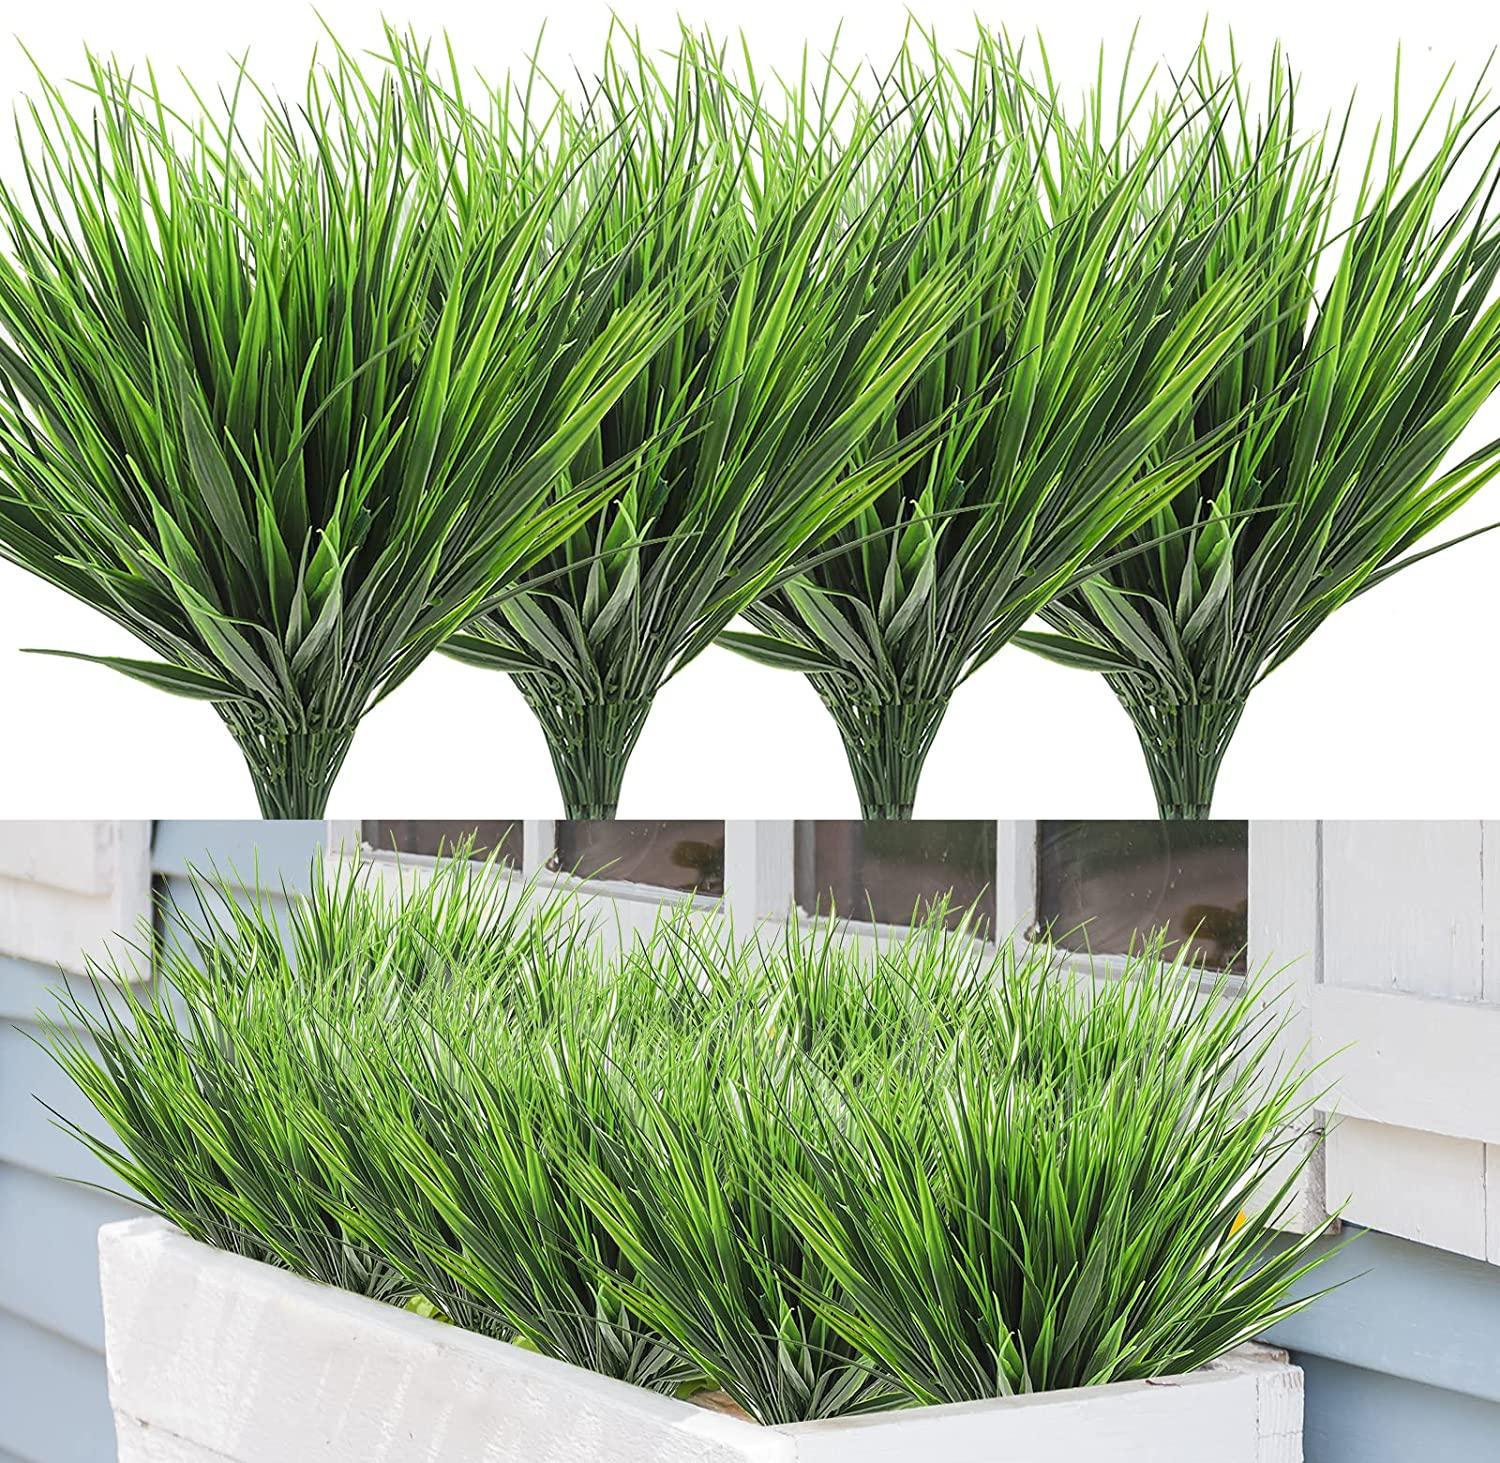 14pcs Artificial Plants Outdoor, UV Resistant Fake Grass Outdoor Plants, Plastic Wheat Grass Artificial Greenery Shrubs for Outside - Lasercutwraps Shop